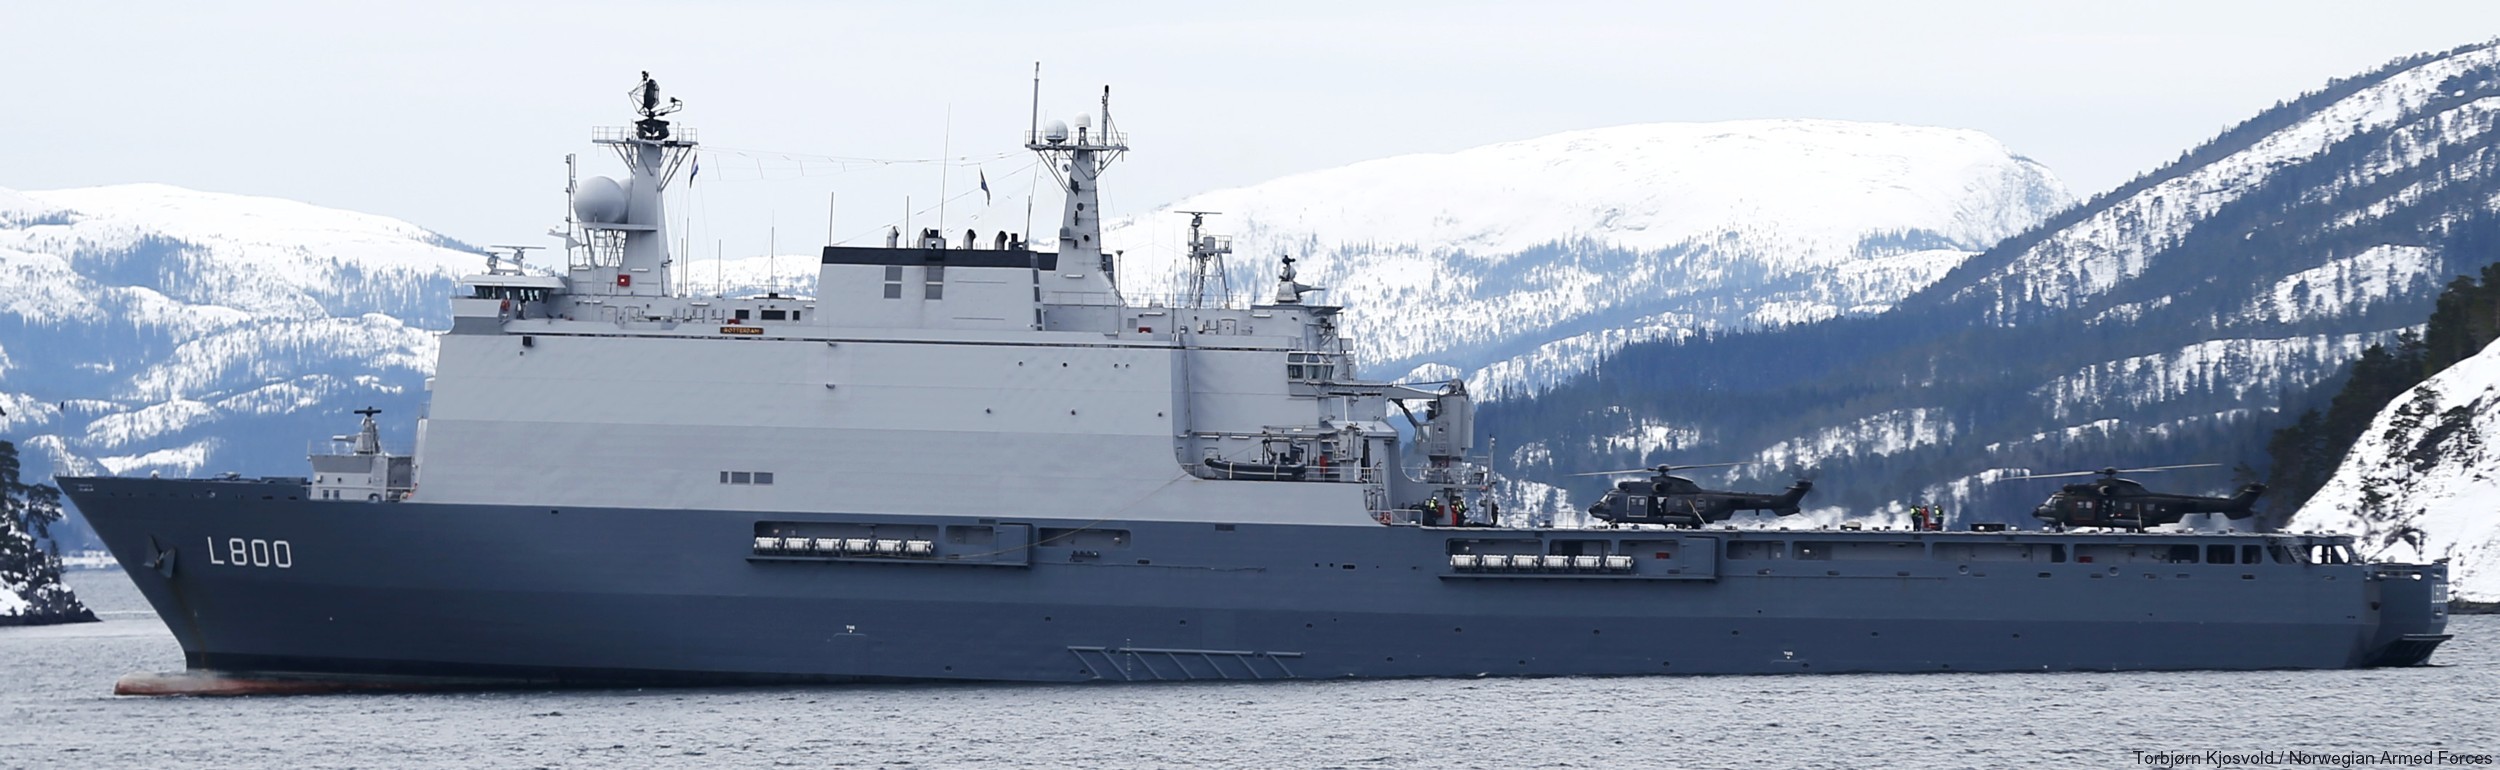 l-800 hnlms rotterdam amphibious landing ship dock lpd royal netherlands navy 26 nato exercise